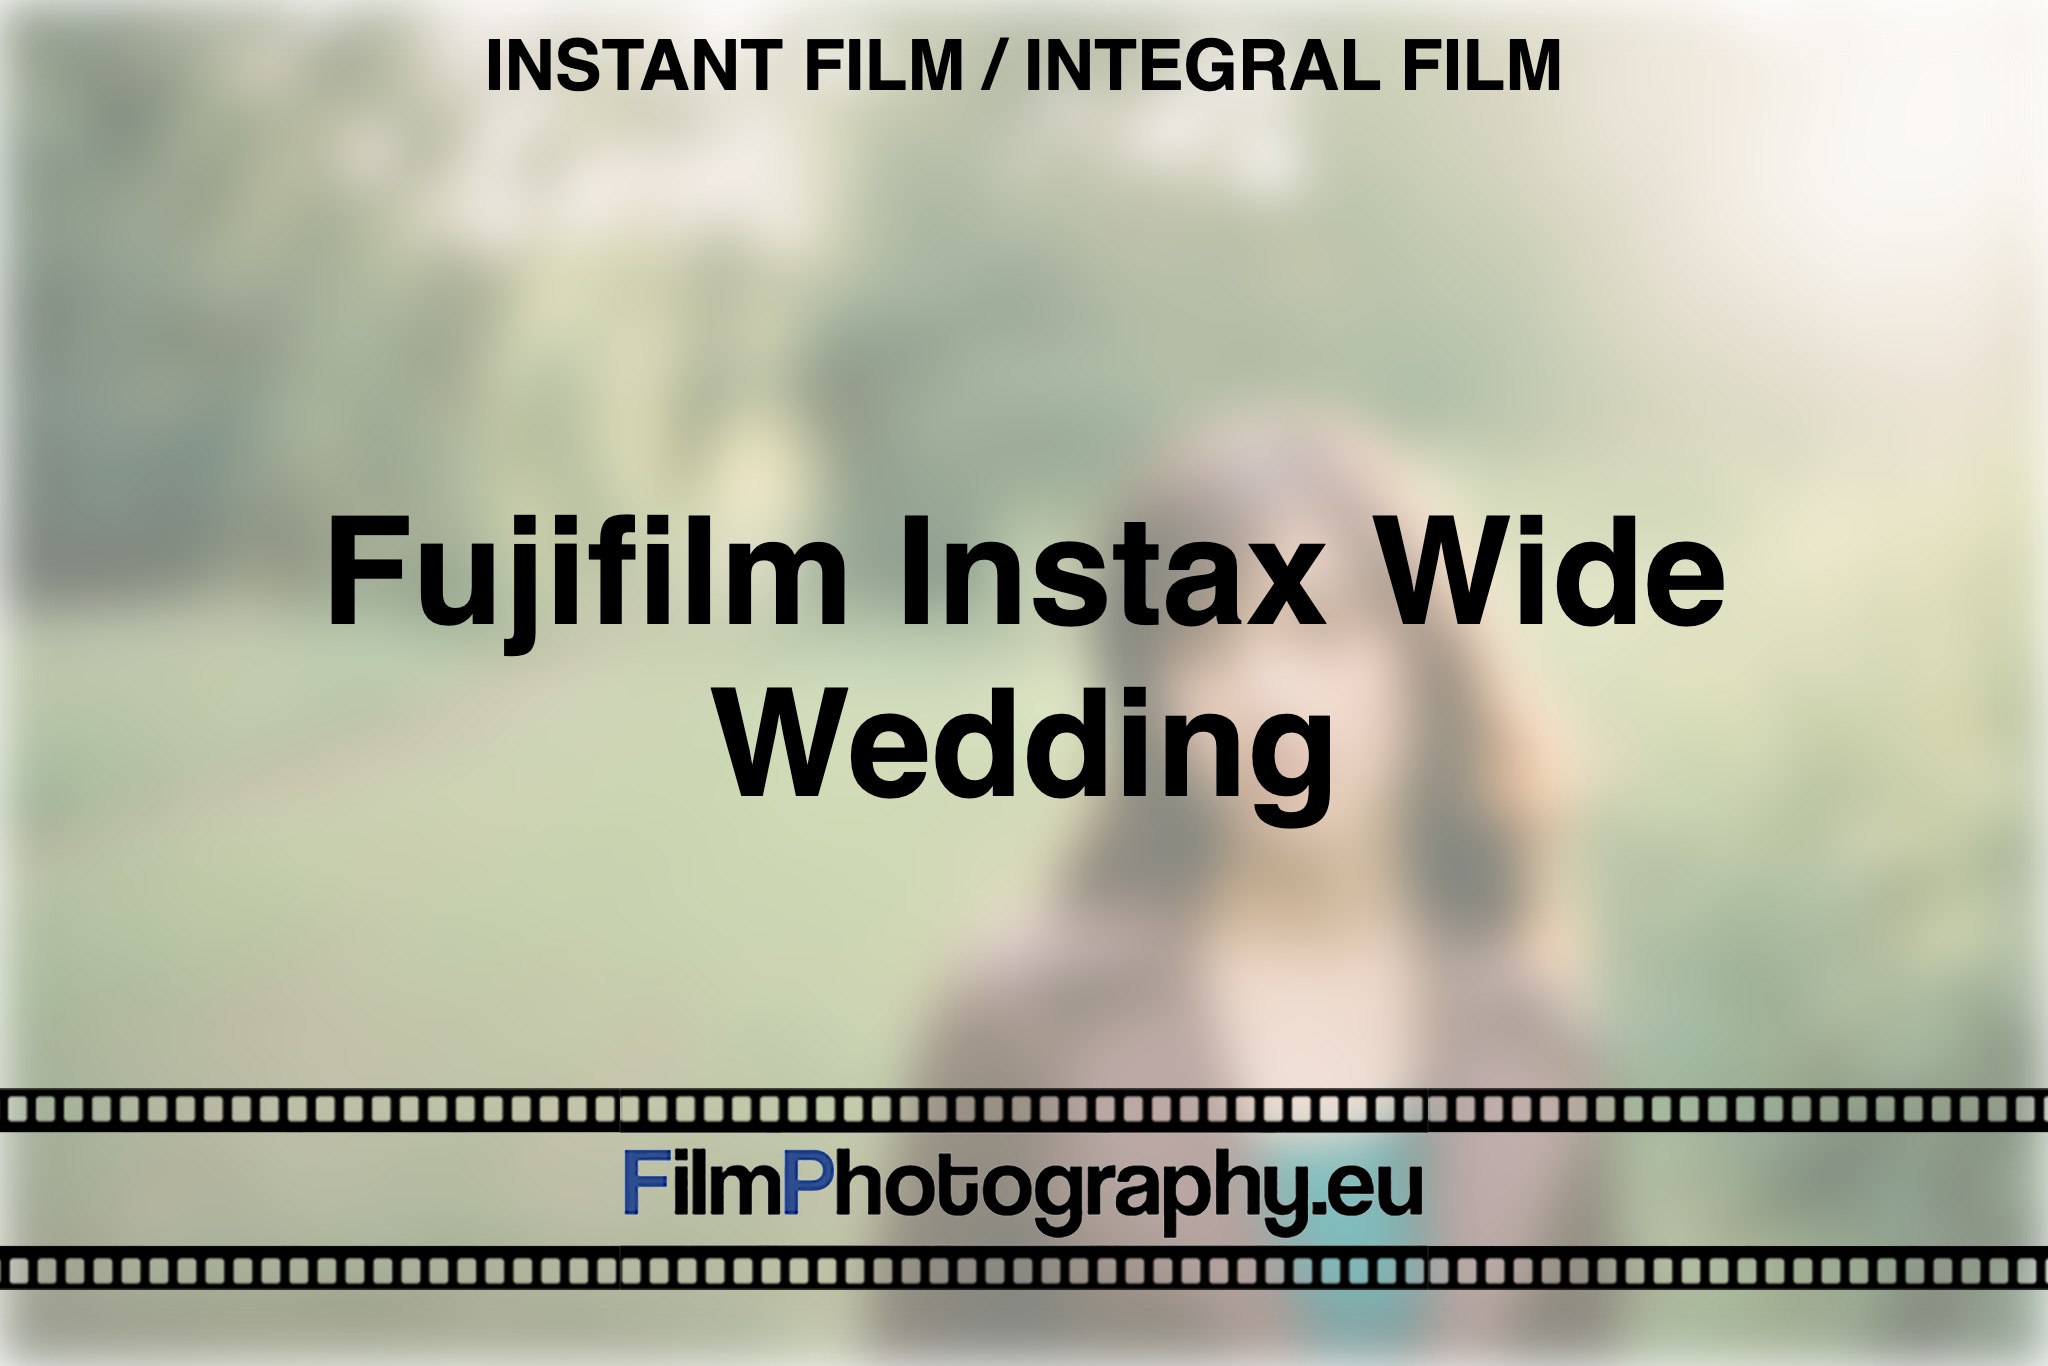 fujifilm-instax-wide-wedding-instant-film-integral-film-bnv